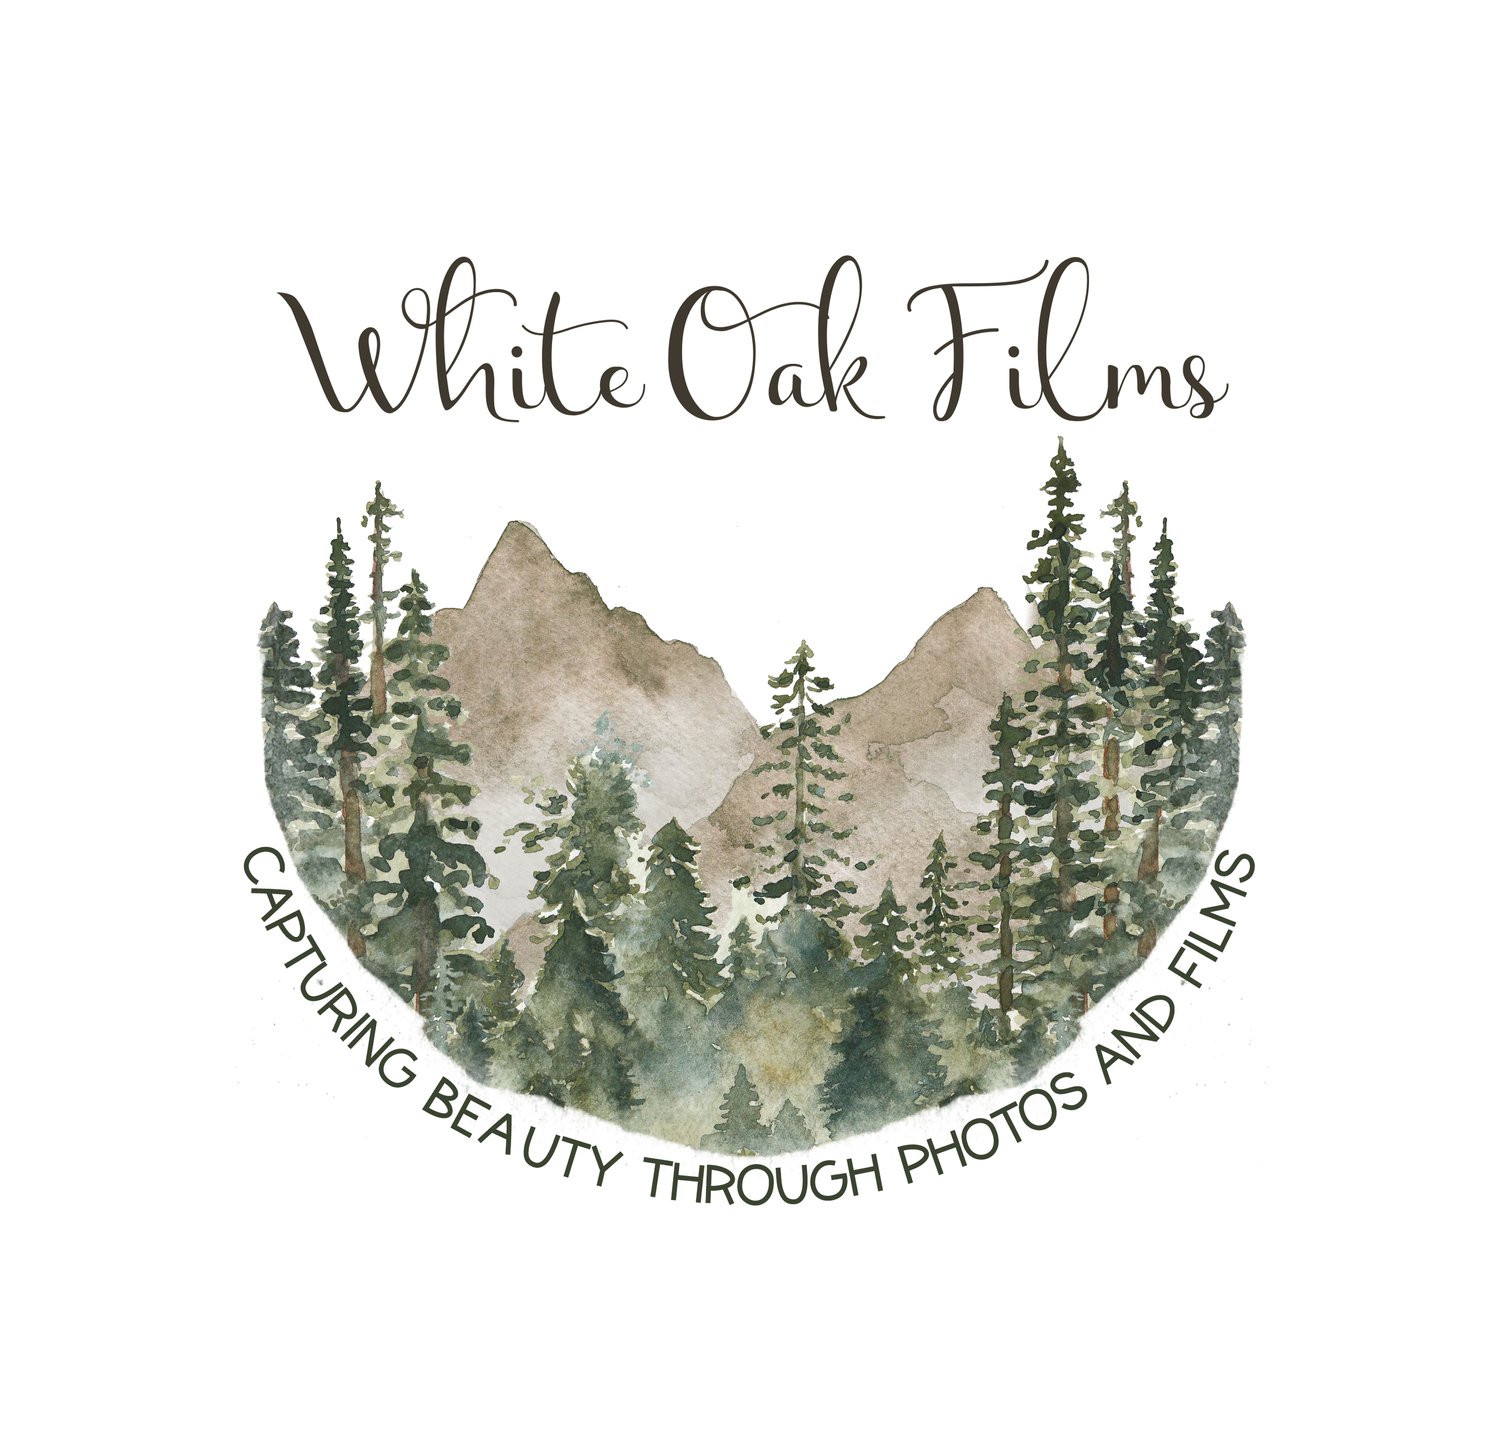 White Oak Films